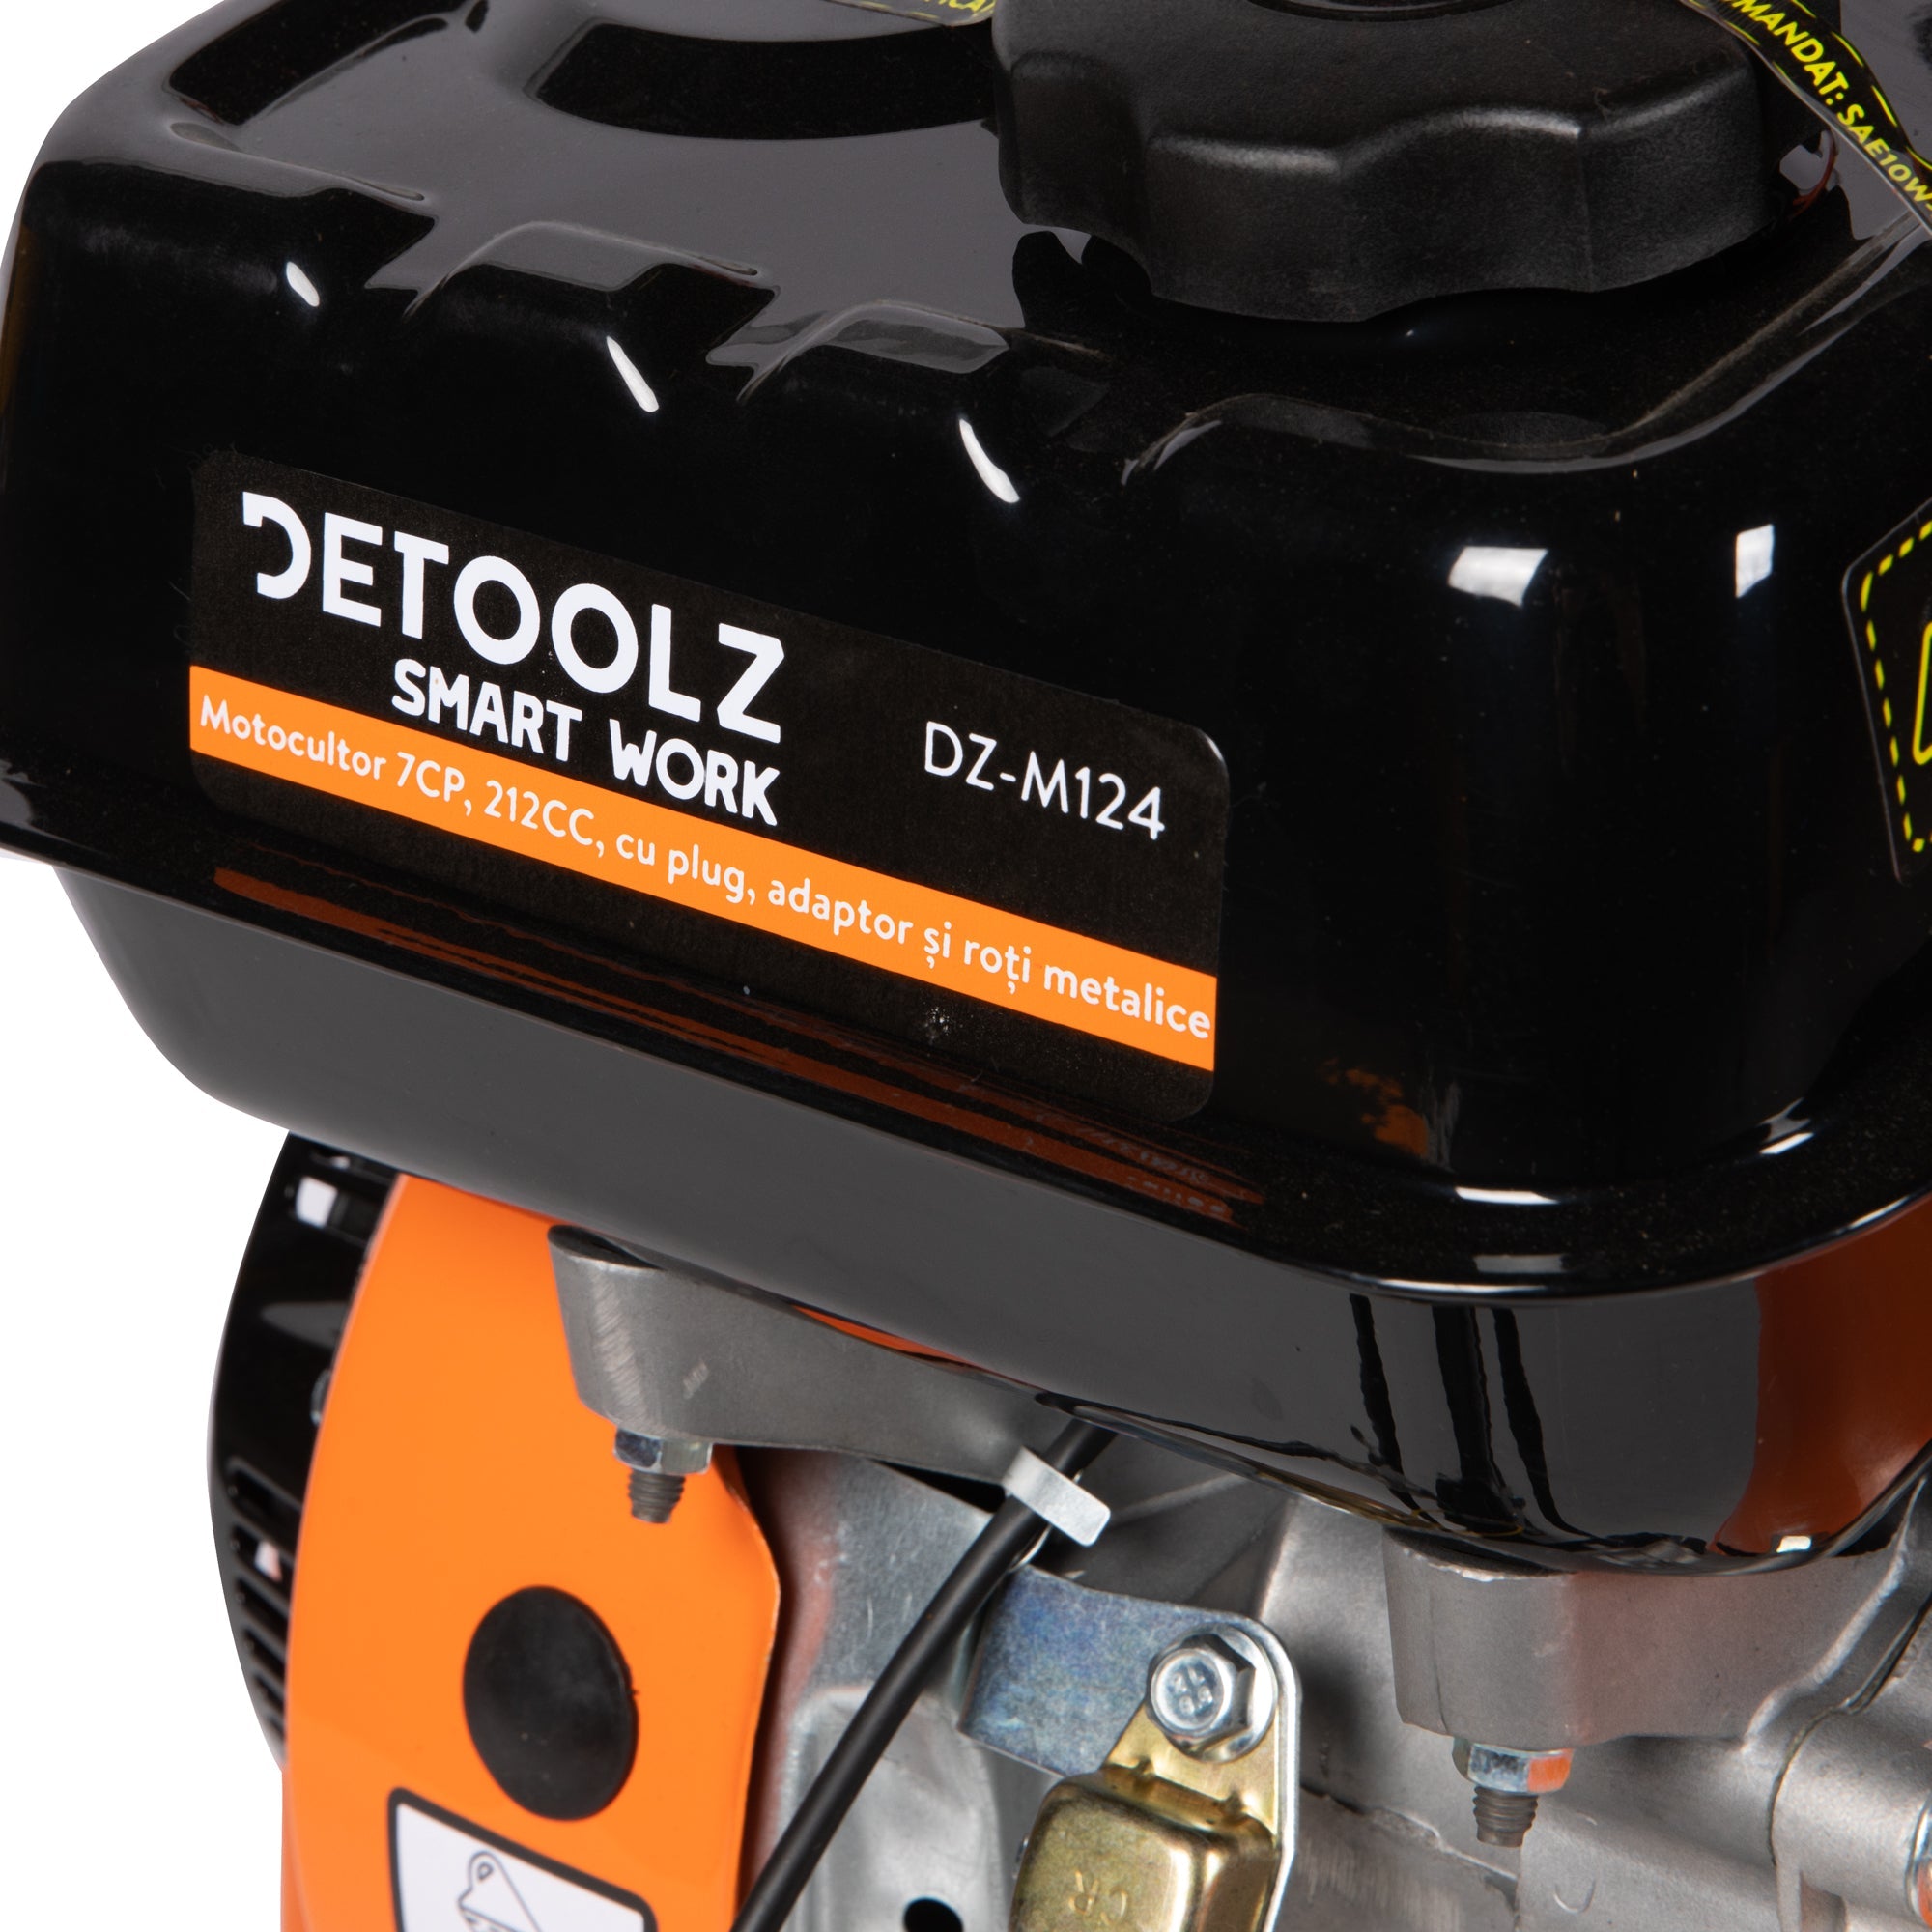 Бензинов култиватор 7CP 212CC 3 скорости с плуг, адаптер и метални колела DETOOLZ